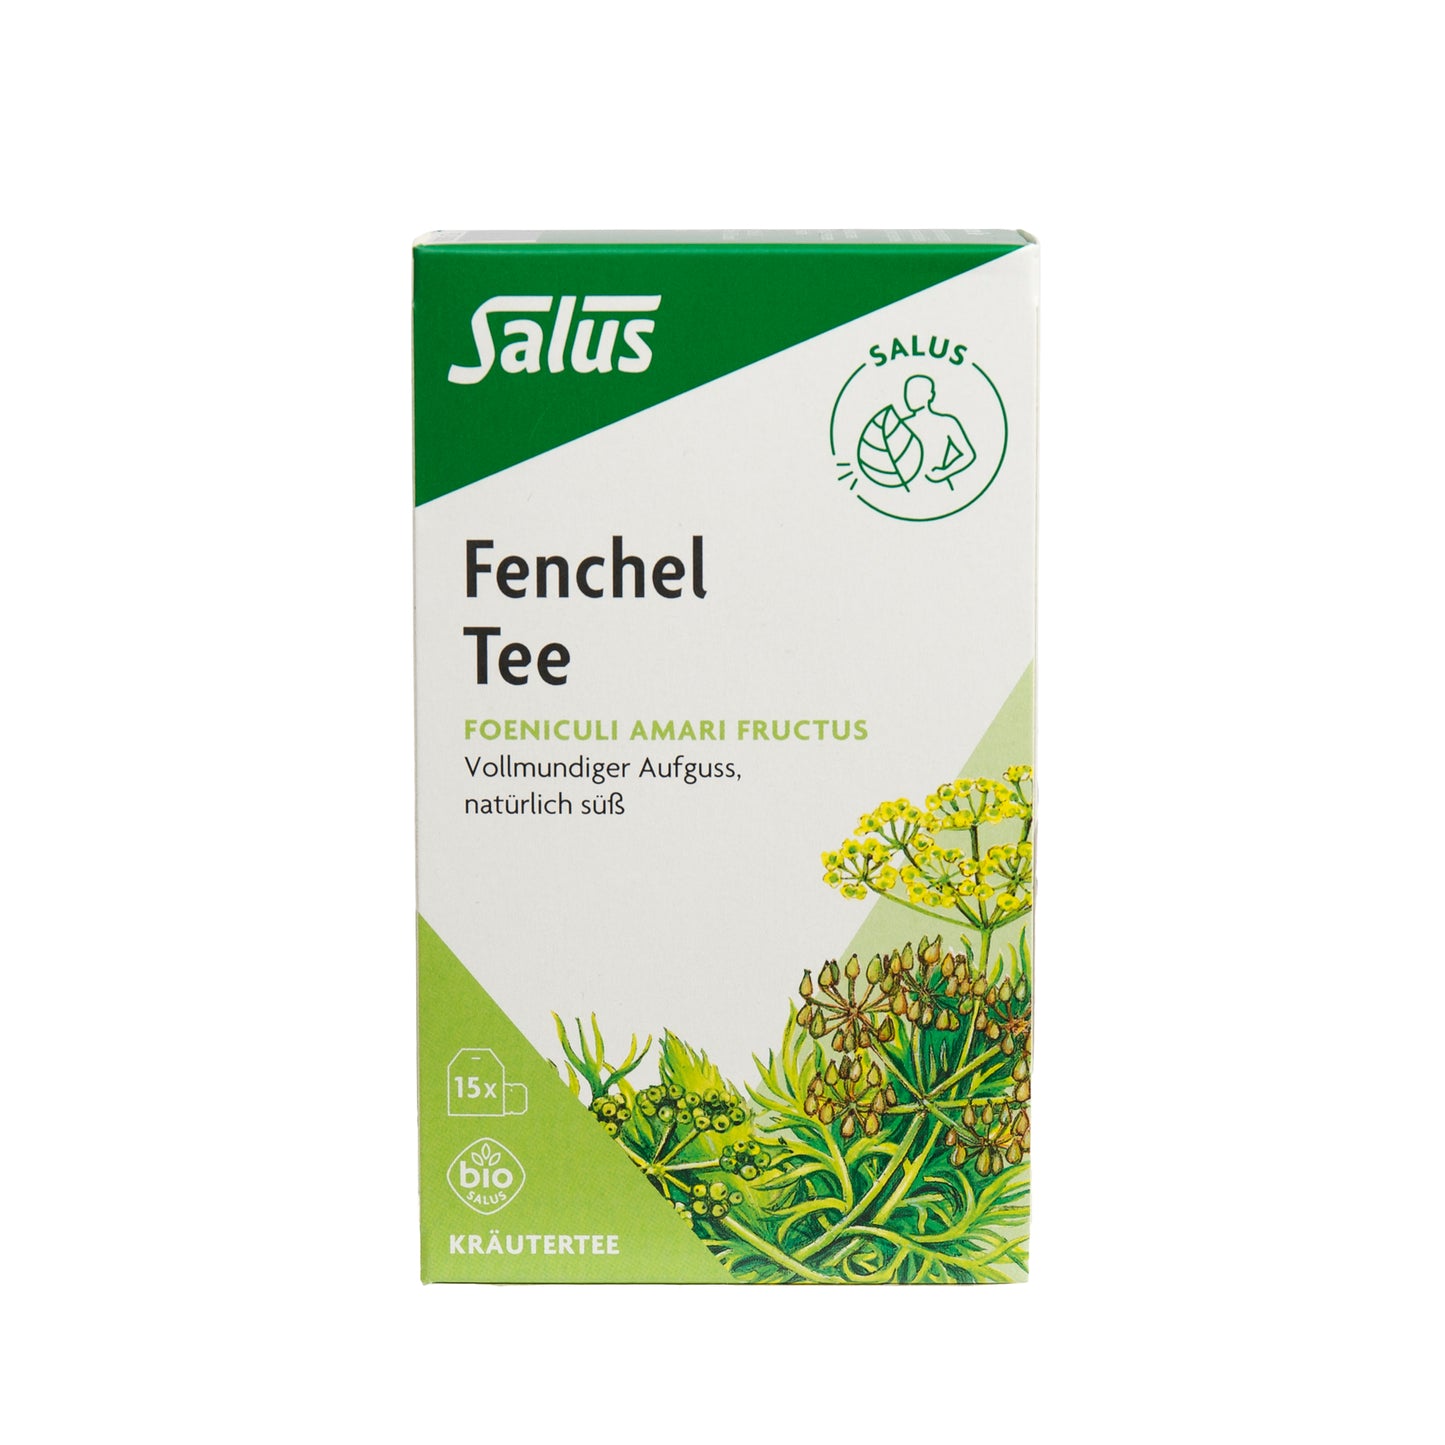 Alternate Image of Fennel Herbal Tea